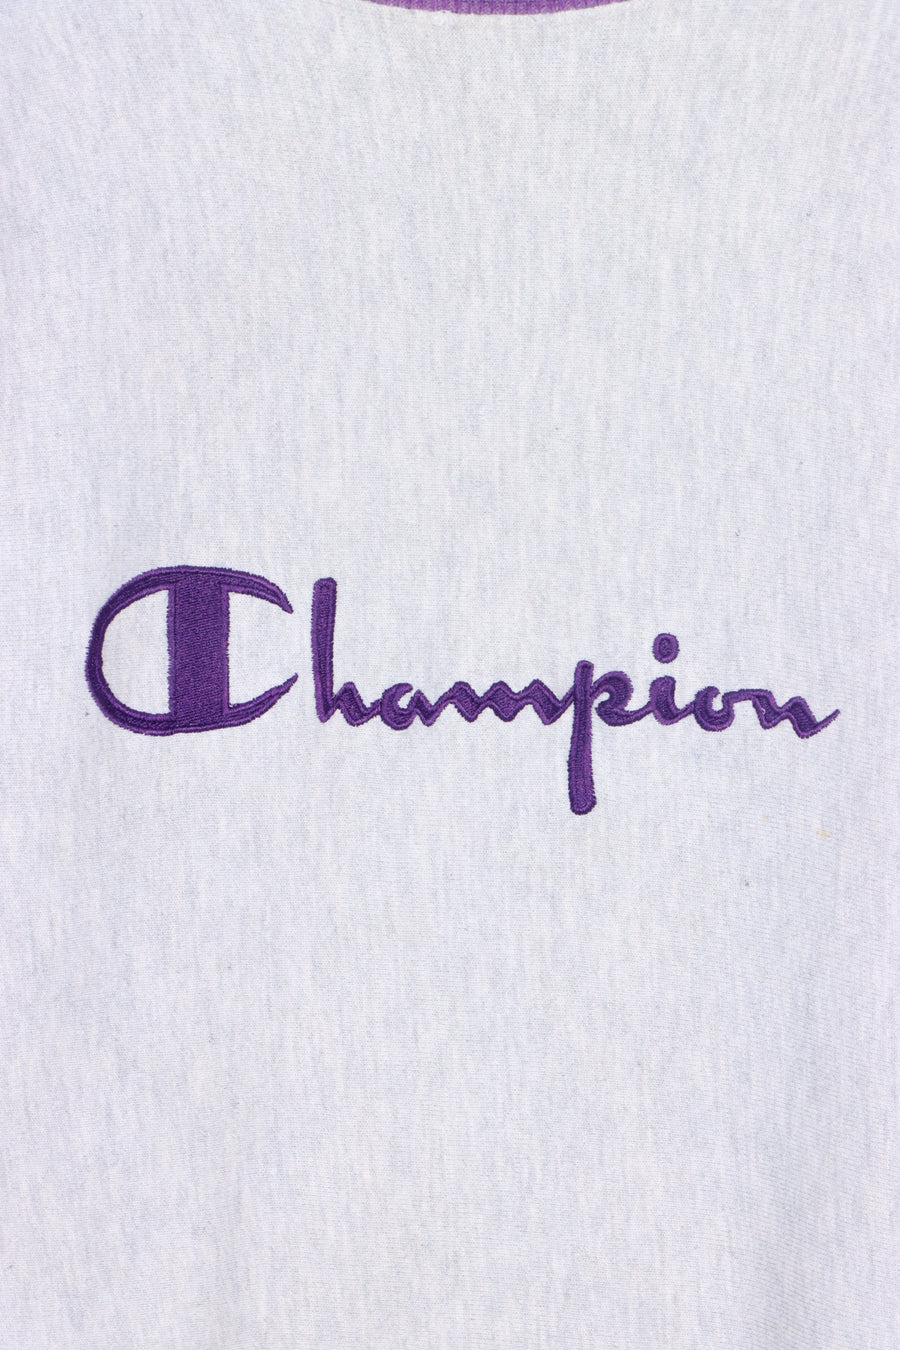 CHAMPION Reverse Weave Grey Marle & Purple Ringer Sweatshirt (M-L)